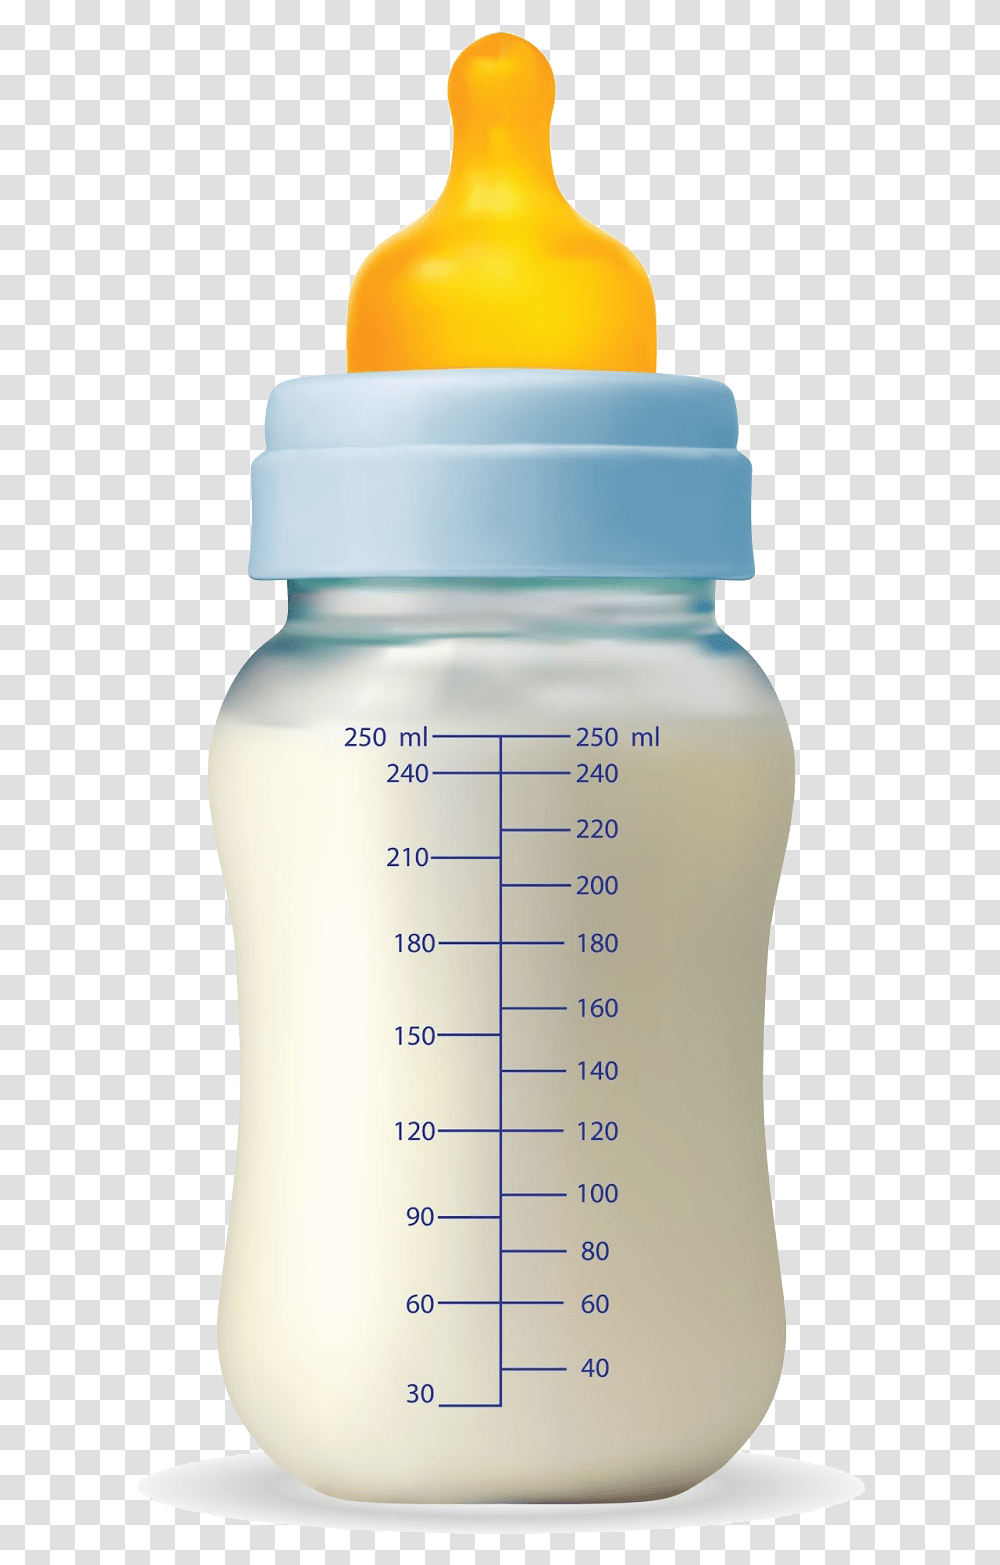 Download Hd Images Baby Milk Bottle, Cup, Measuring Cup, Beverage, Drink Transparent Png